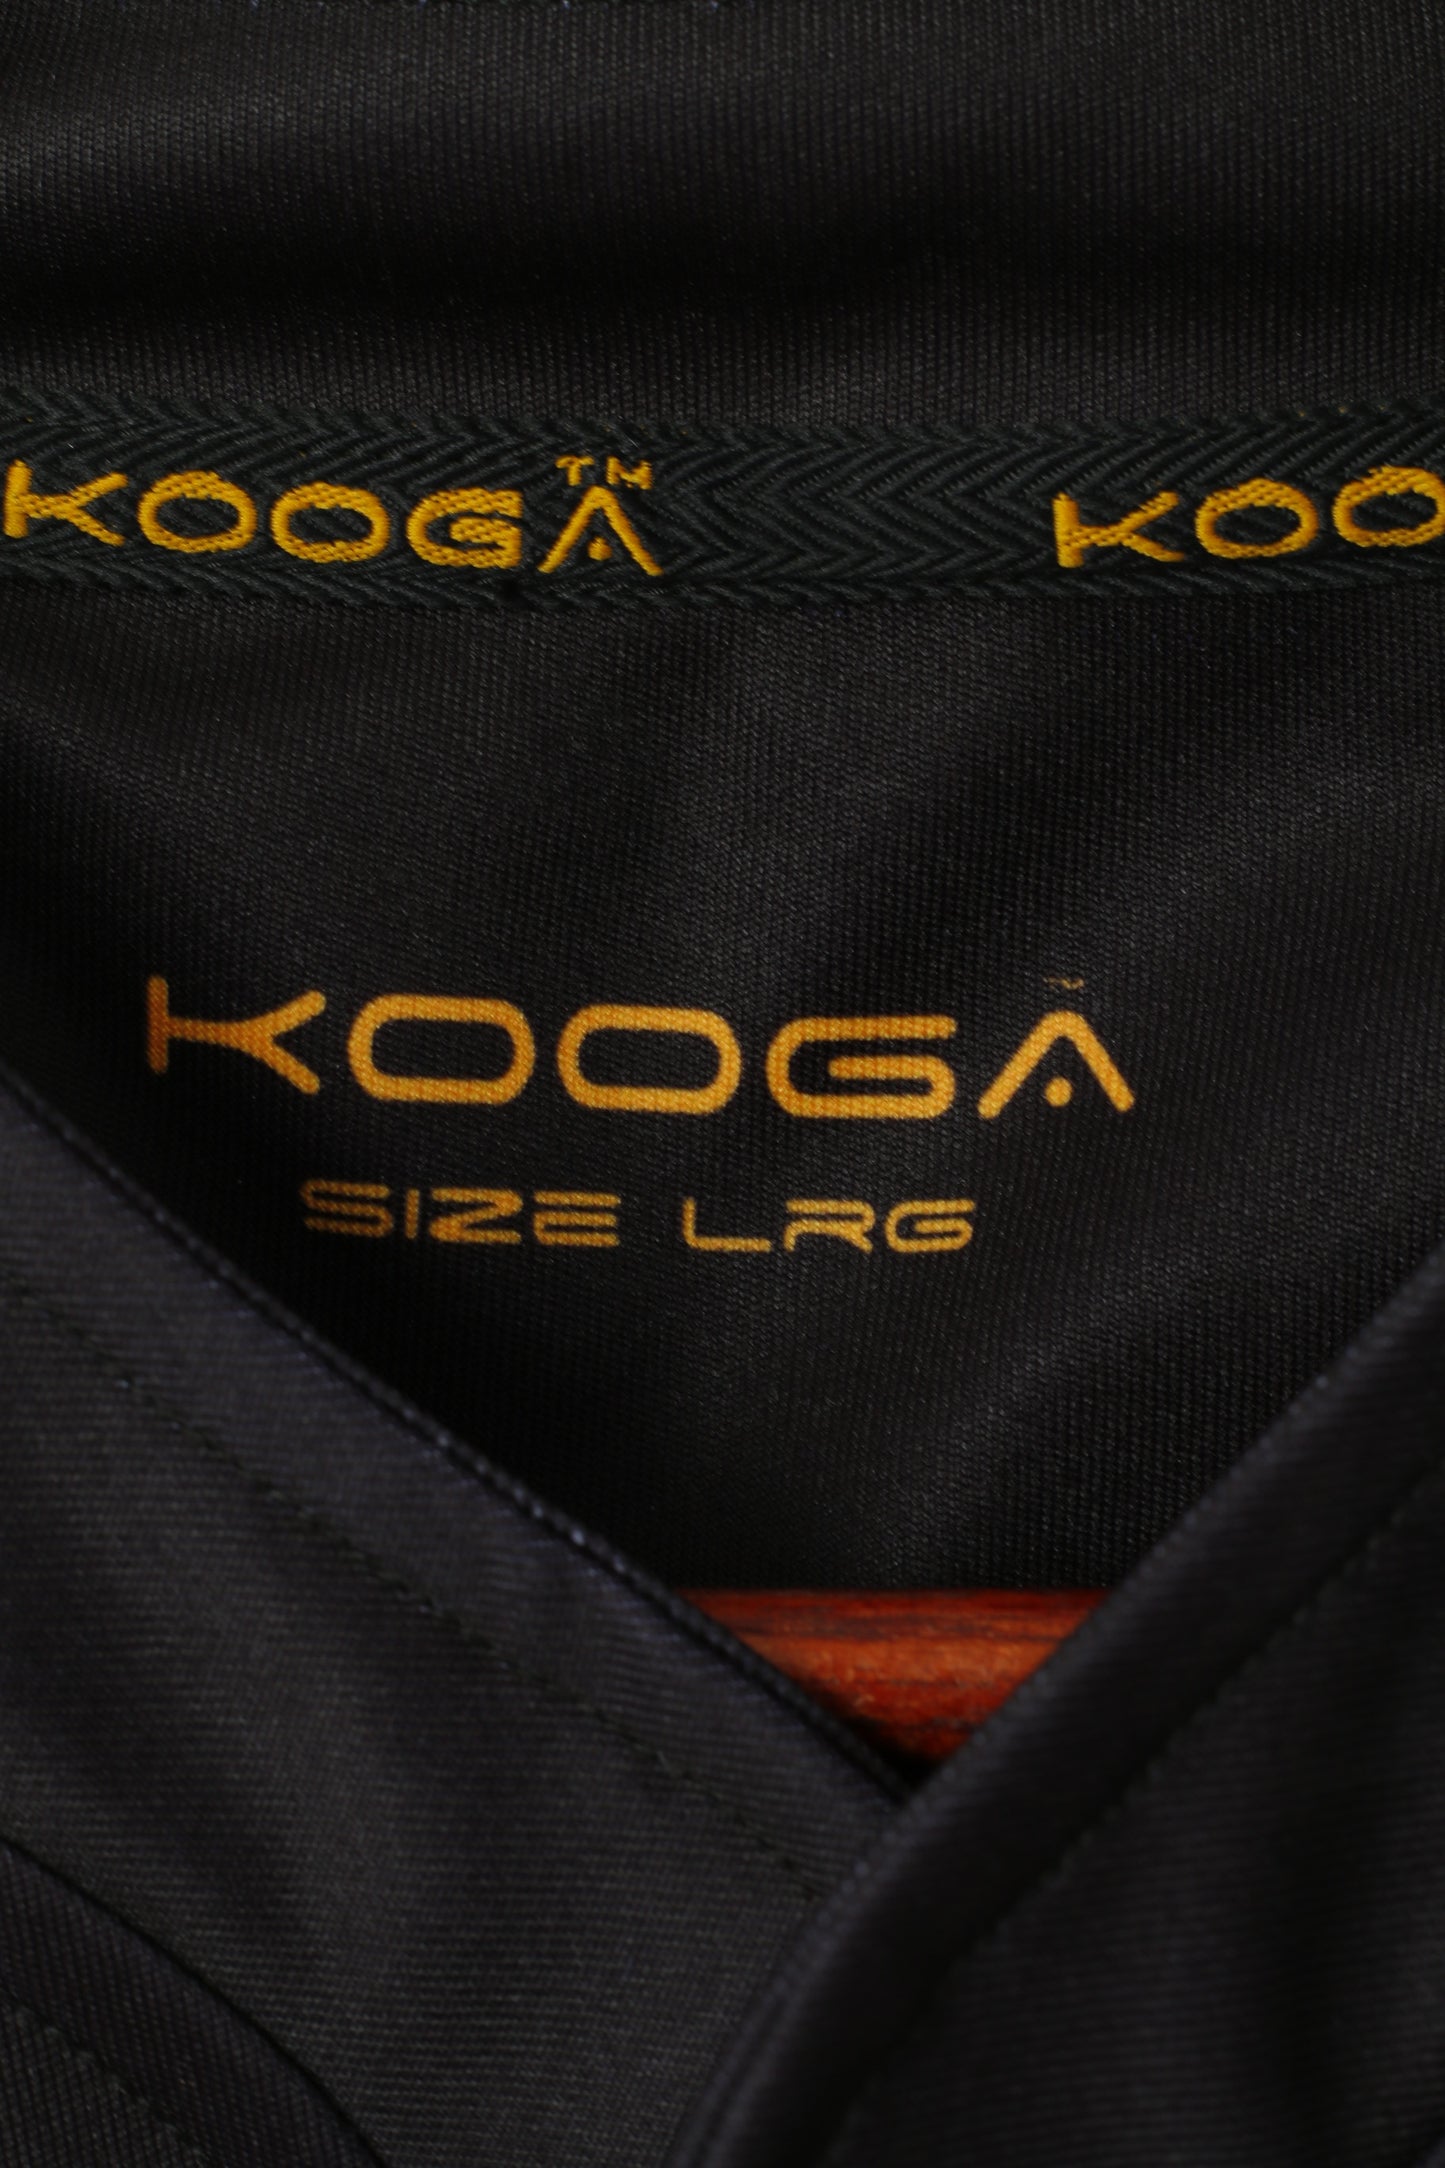 New Kooga Women L Shirt Black Tight Fit Curve Rugby Performance Jersey Top